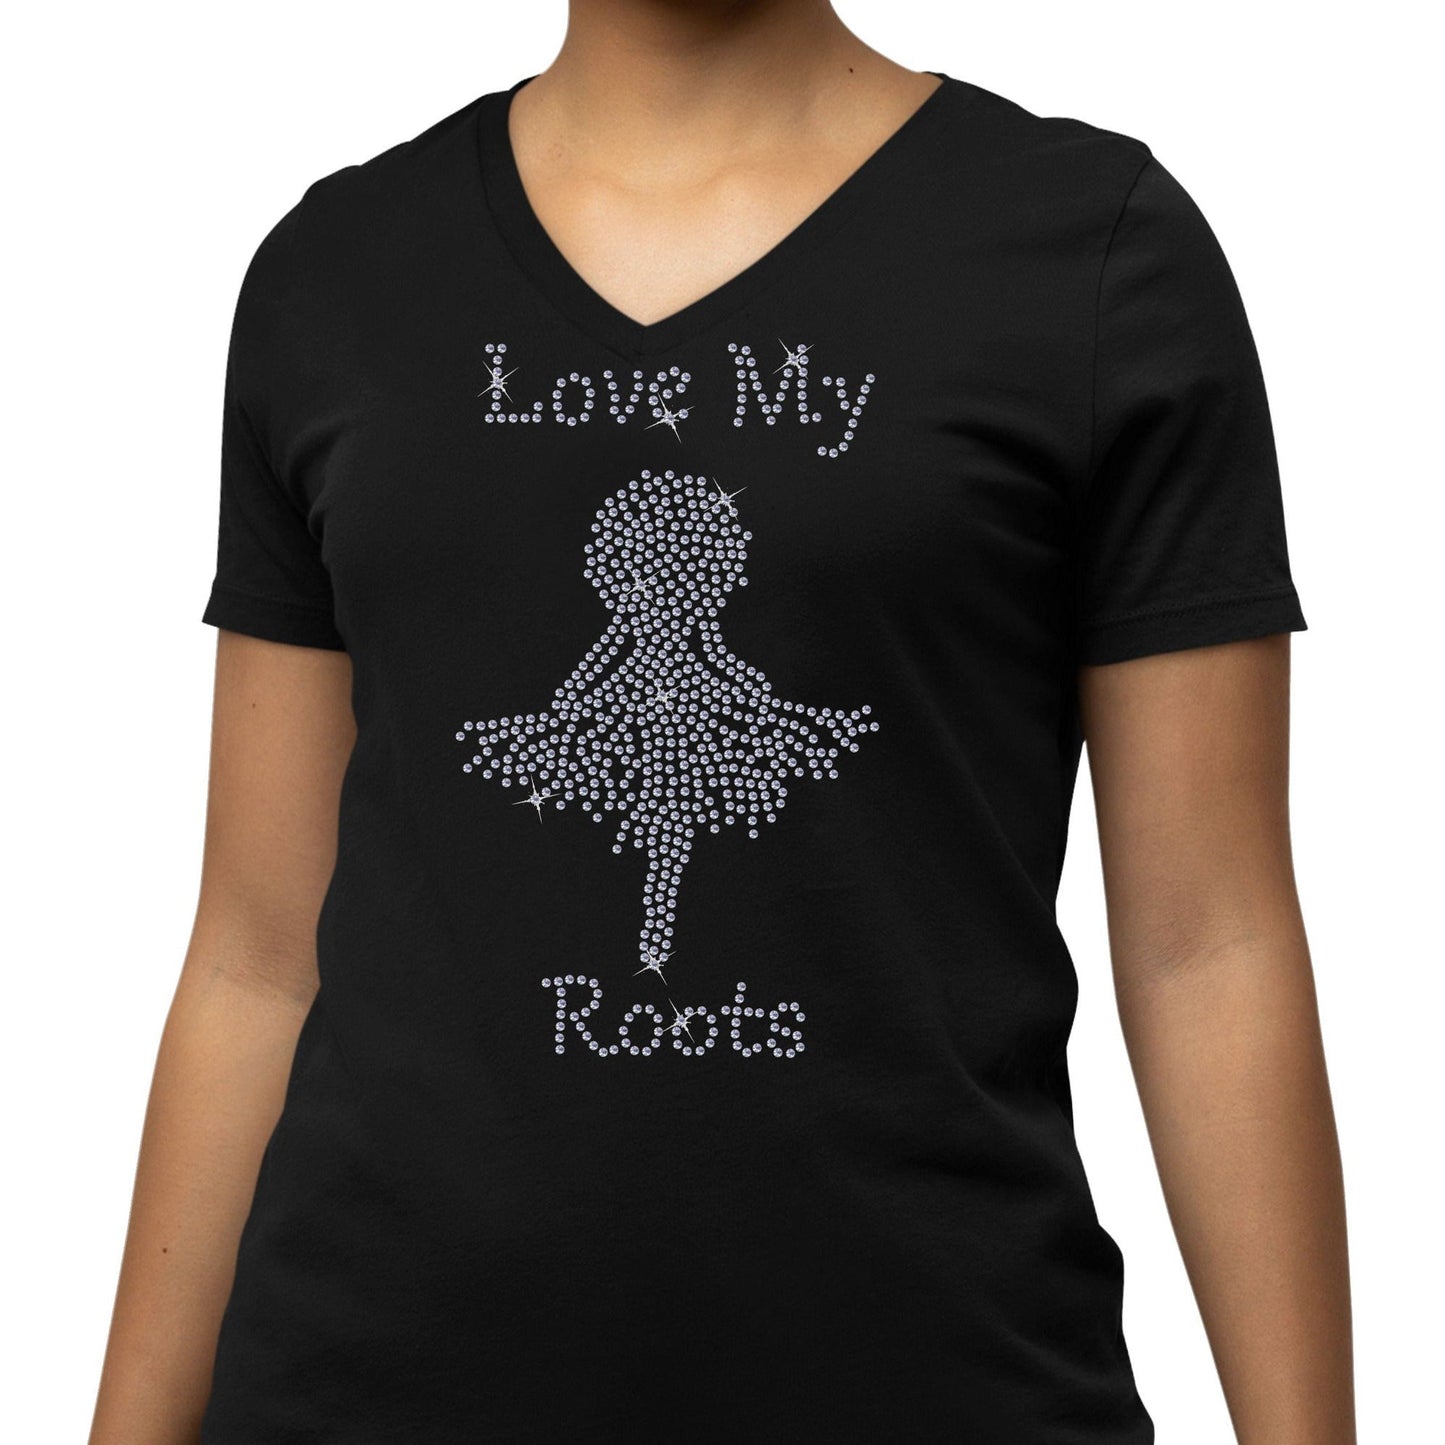 Love My Roots Black V-Neck Tee